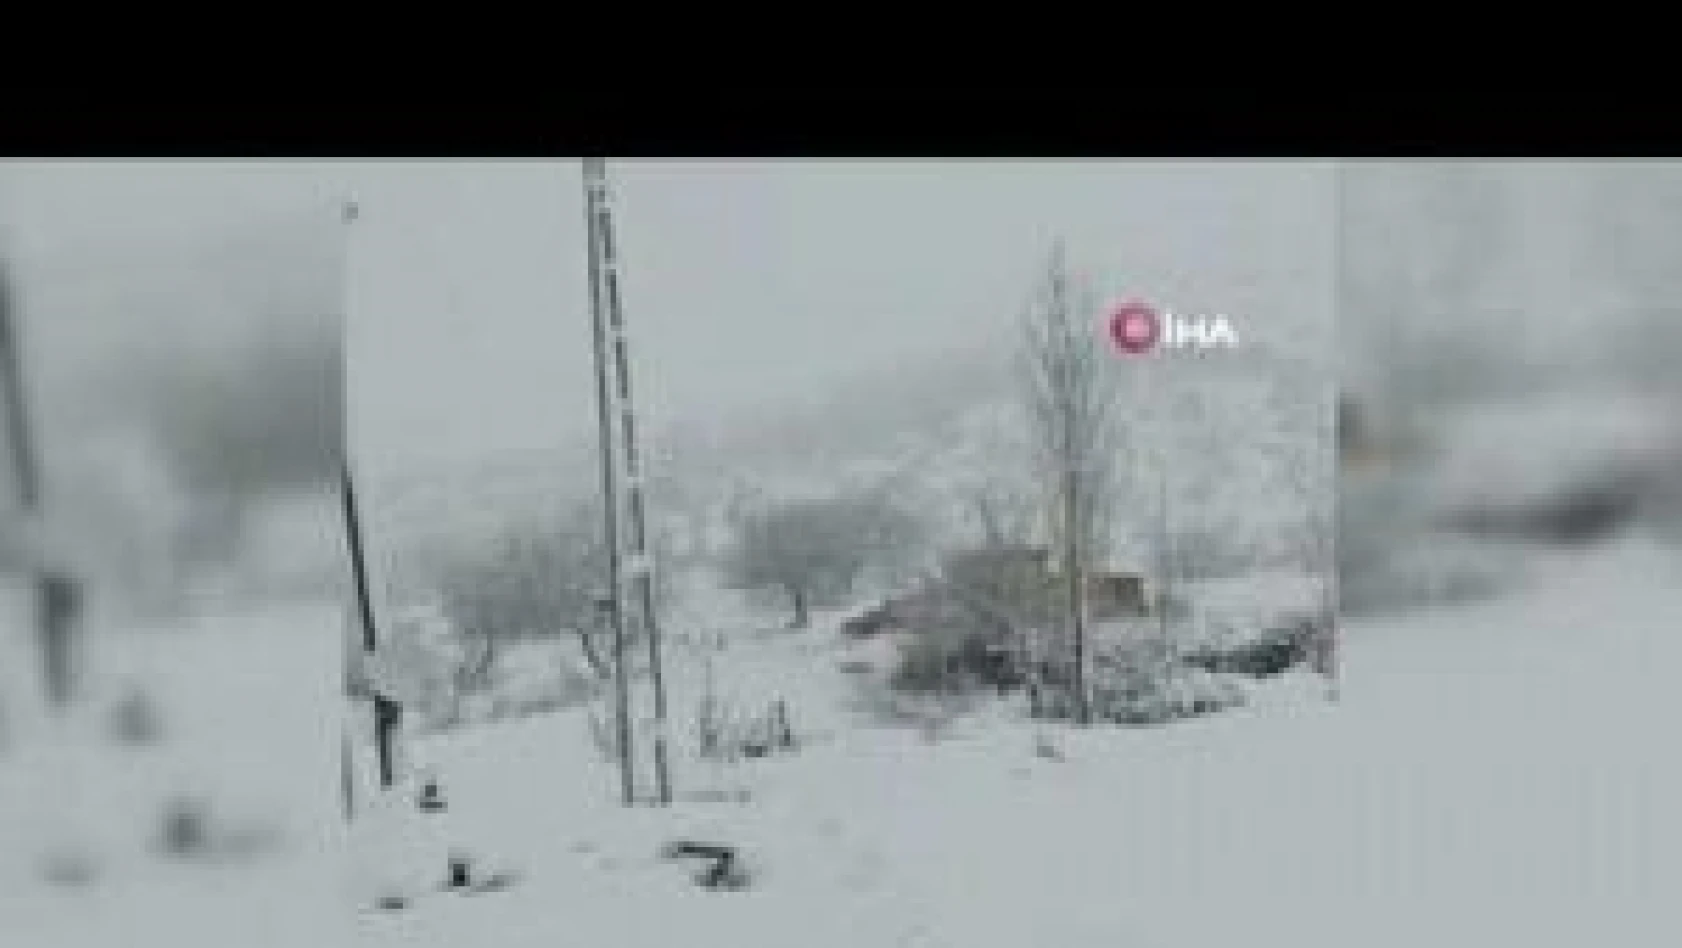 Yoğun kar yağışı Şemdinli-Derecik karayolunu kapattı